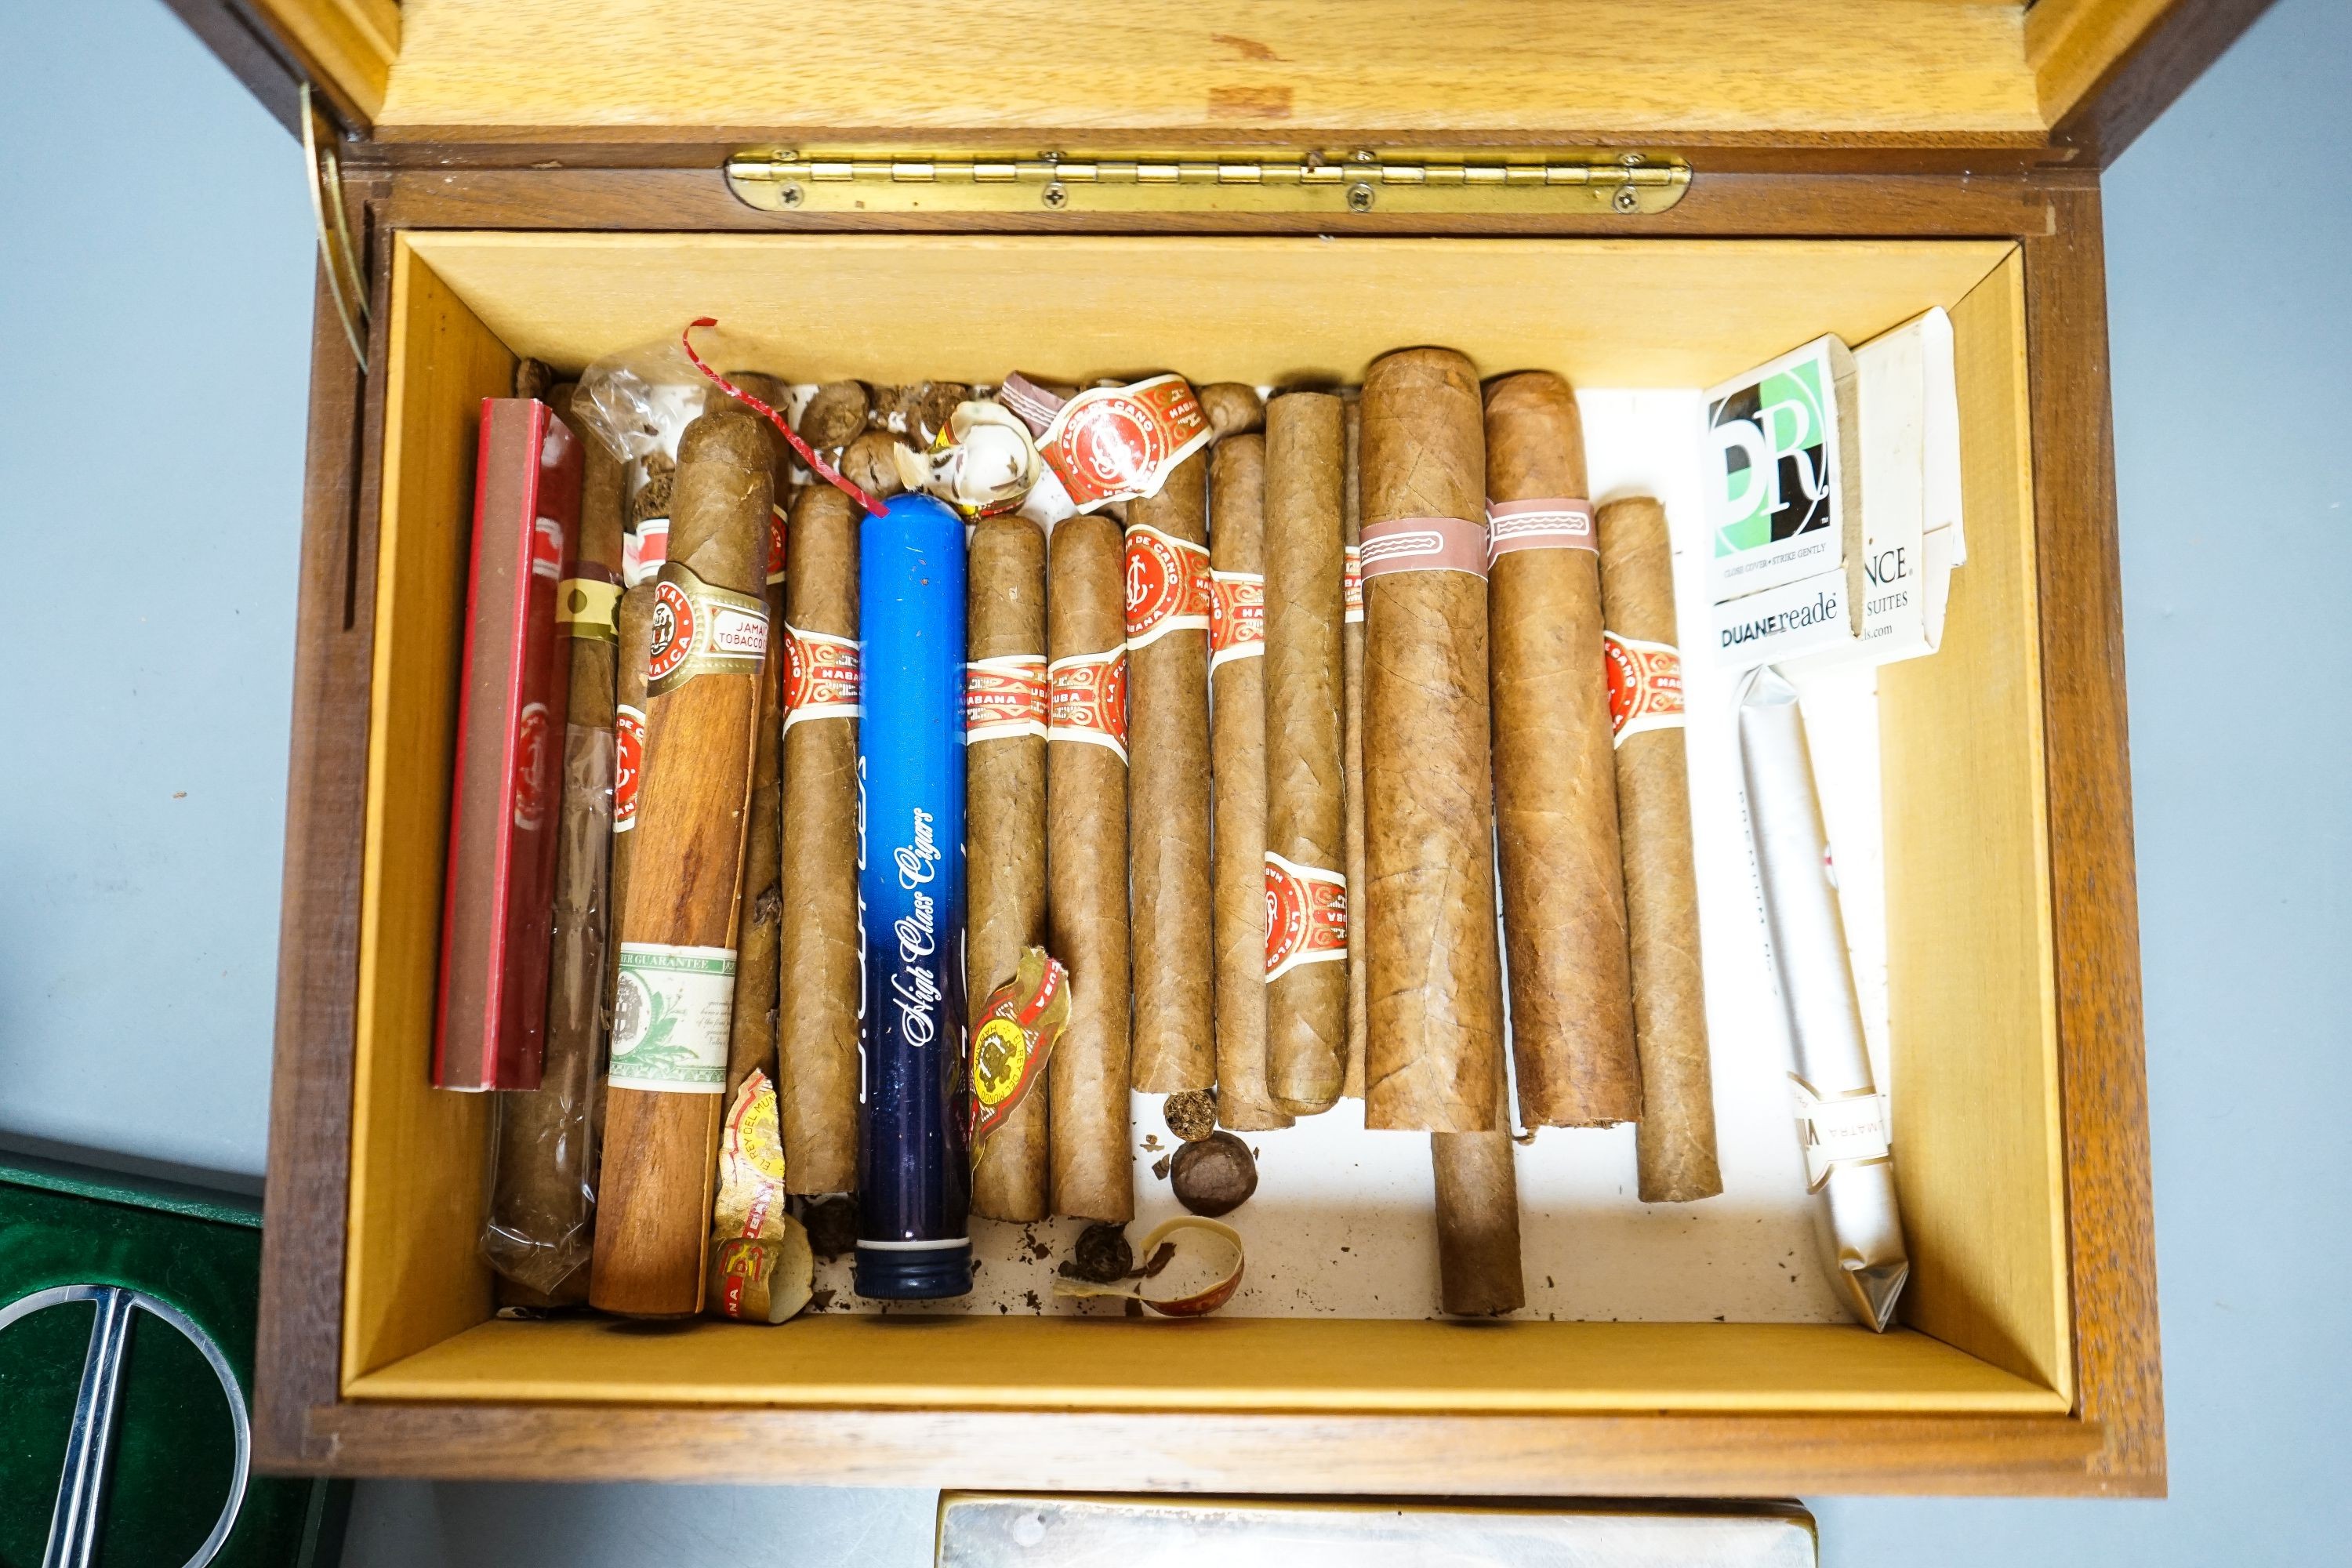 A cased Davidoff cigar cutter, walnut humidor, plated cigarette box, various cigars etc.